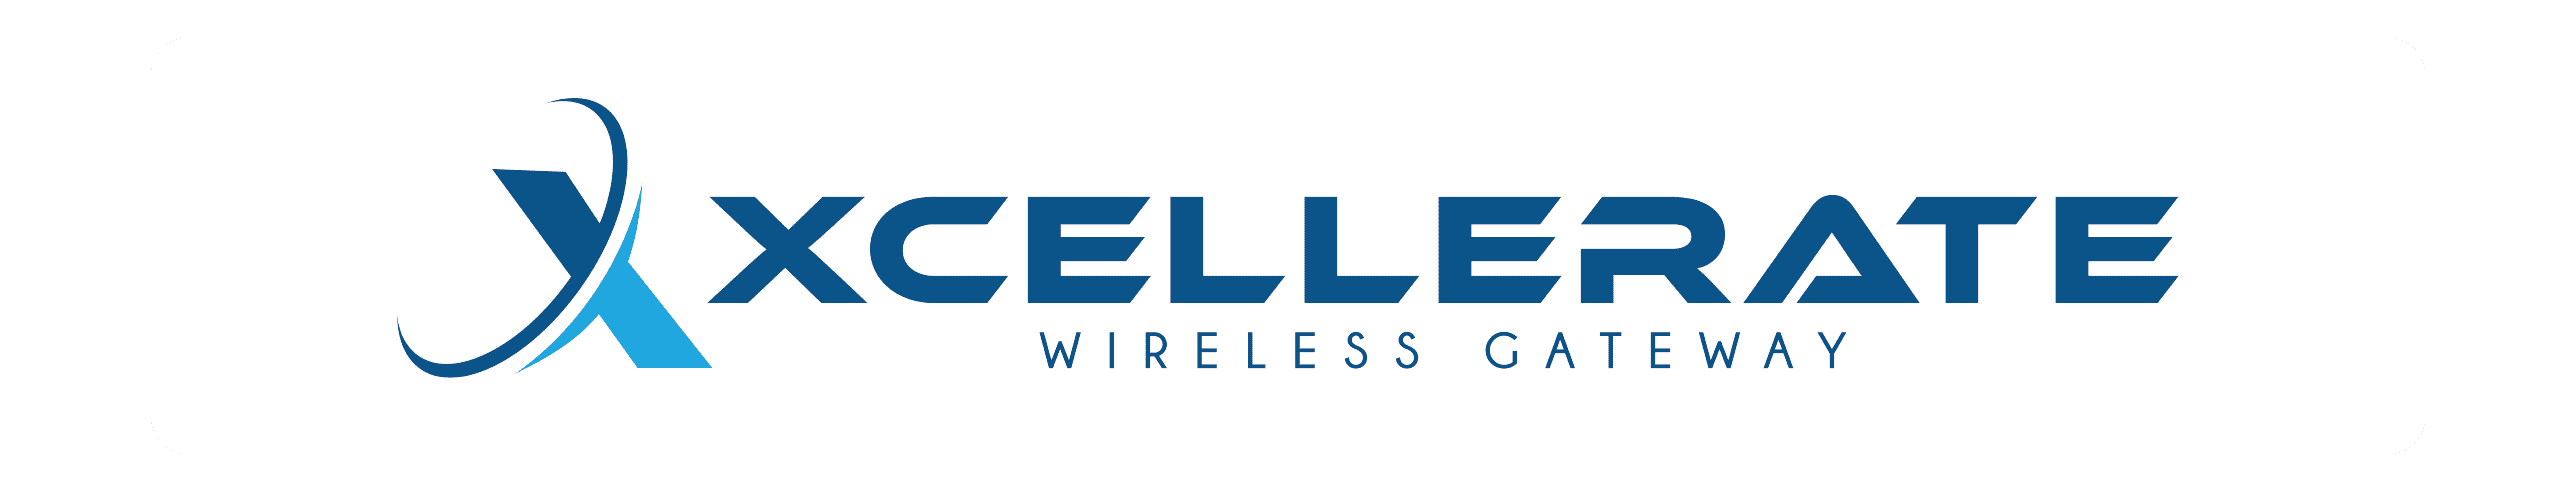 NationalLink Xcellerate Wireless